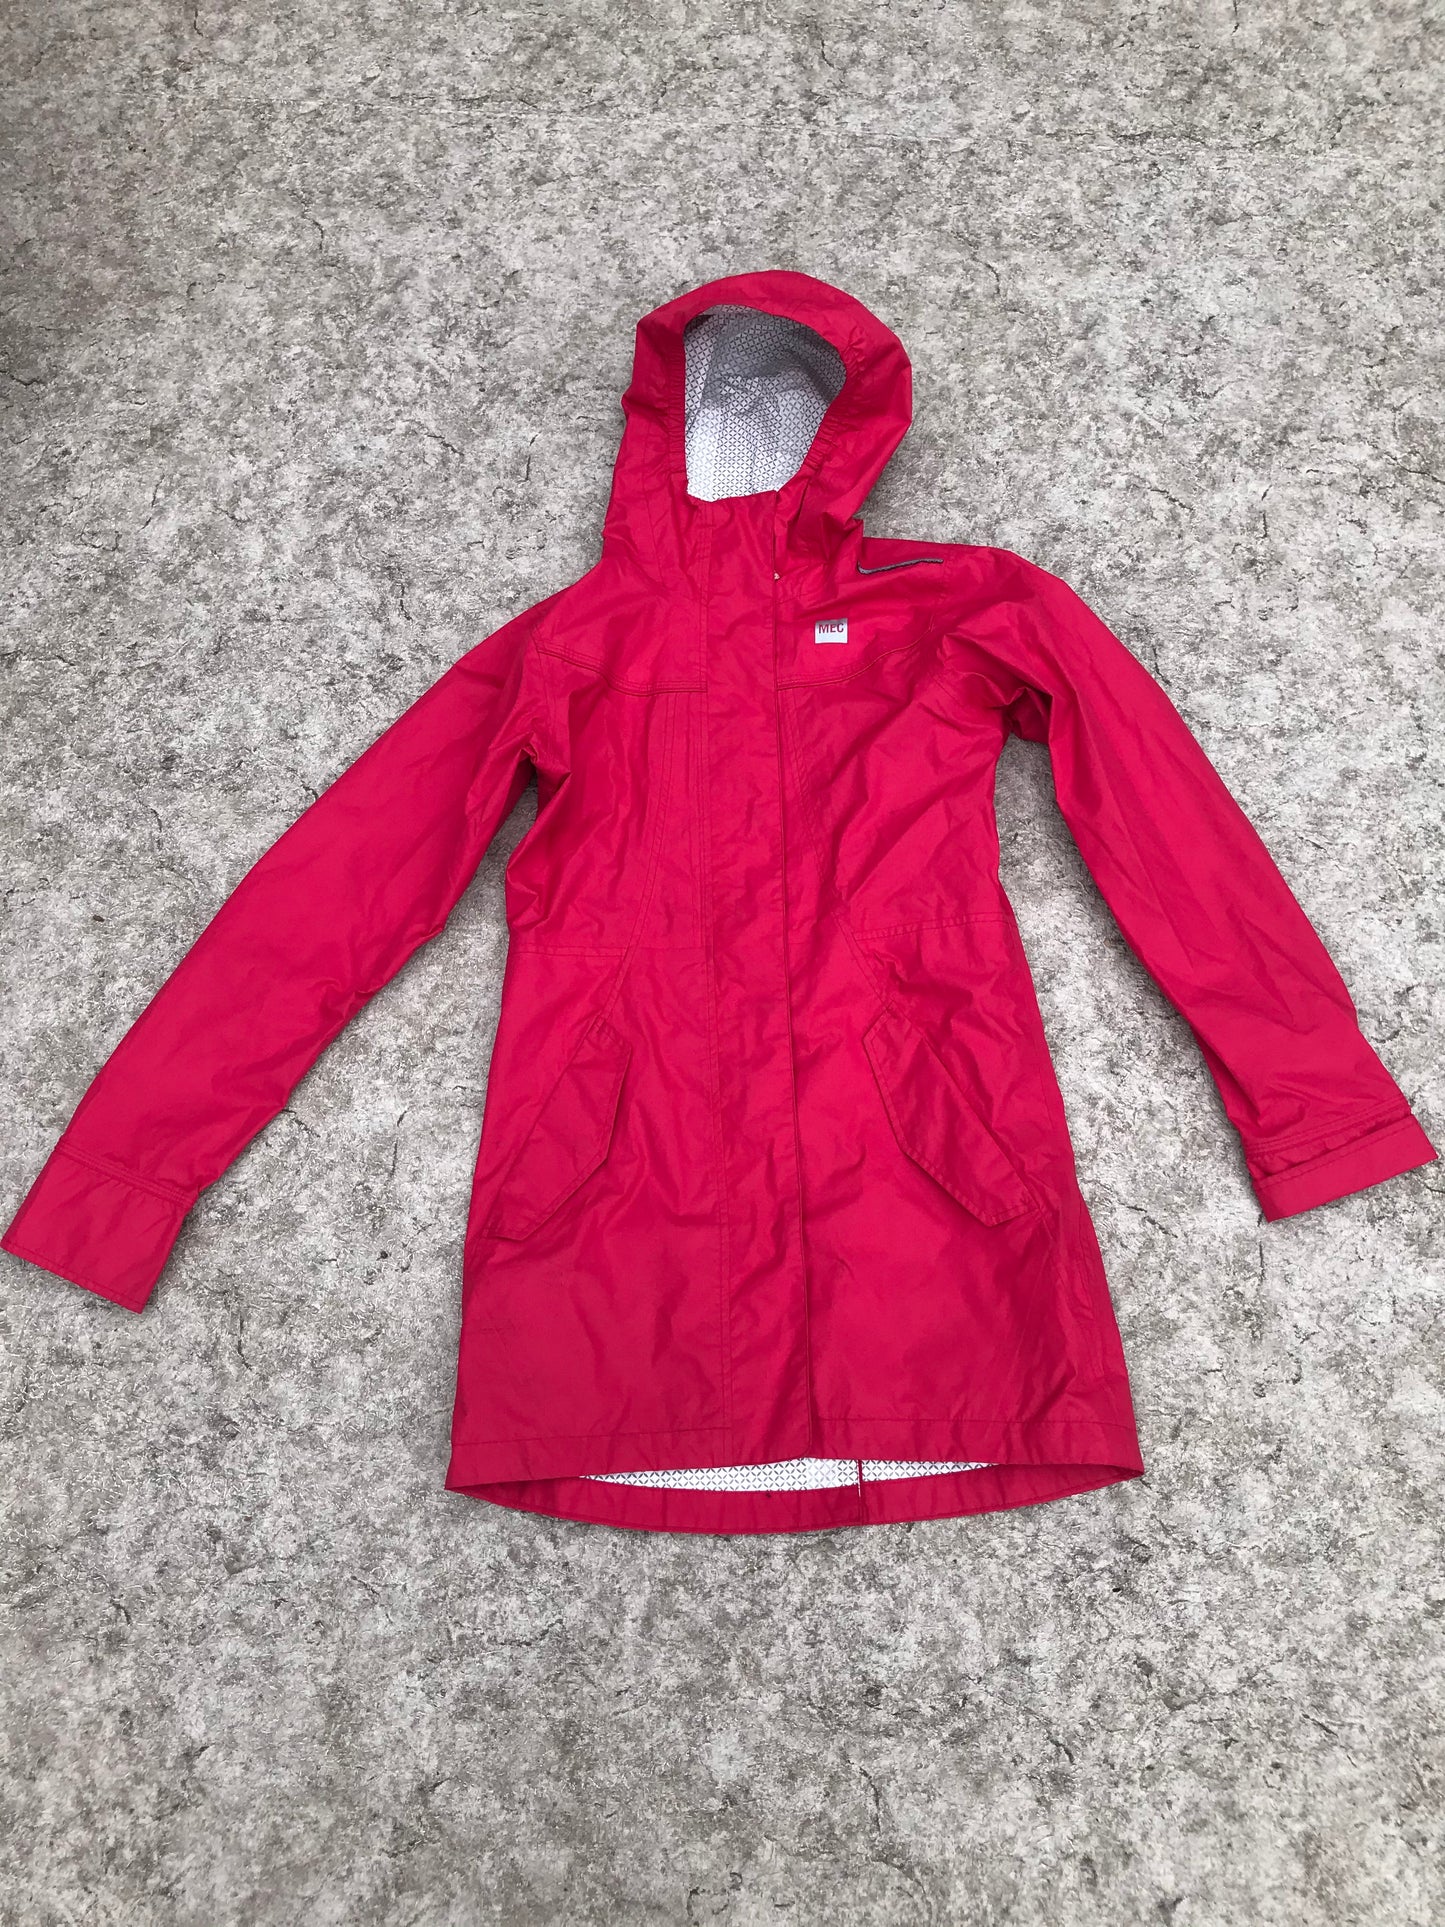 Rain Coat Child Size 14 MEC Raspberry As New JP 5596